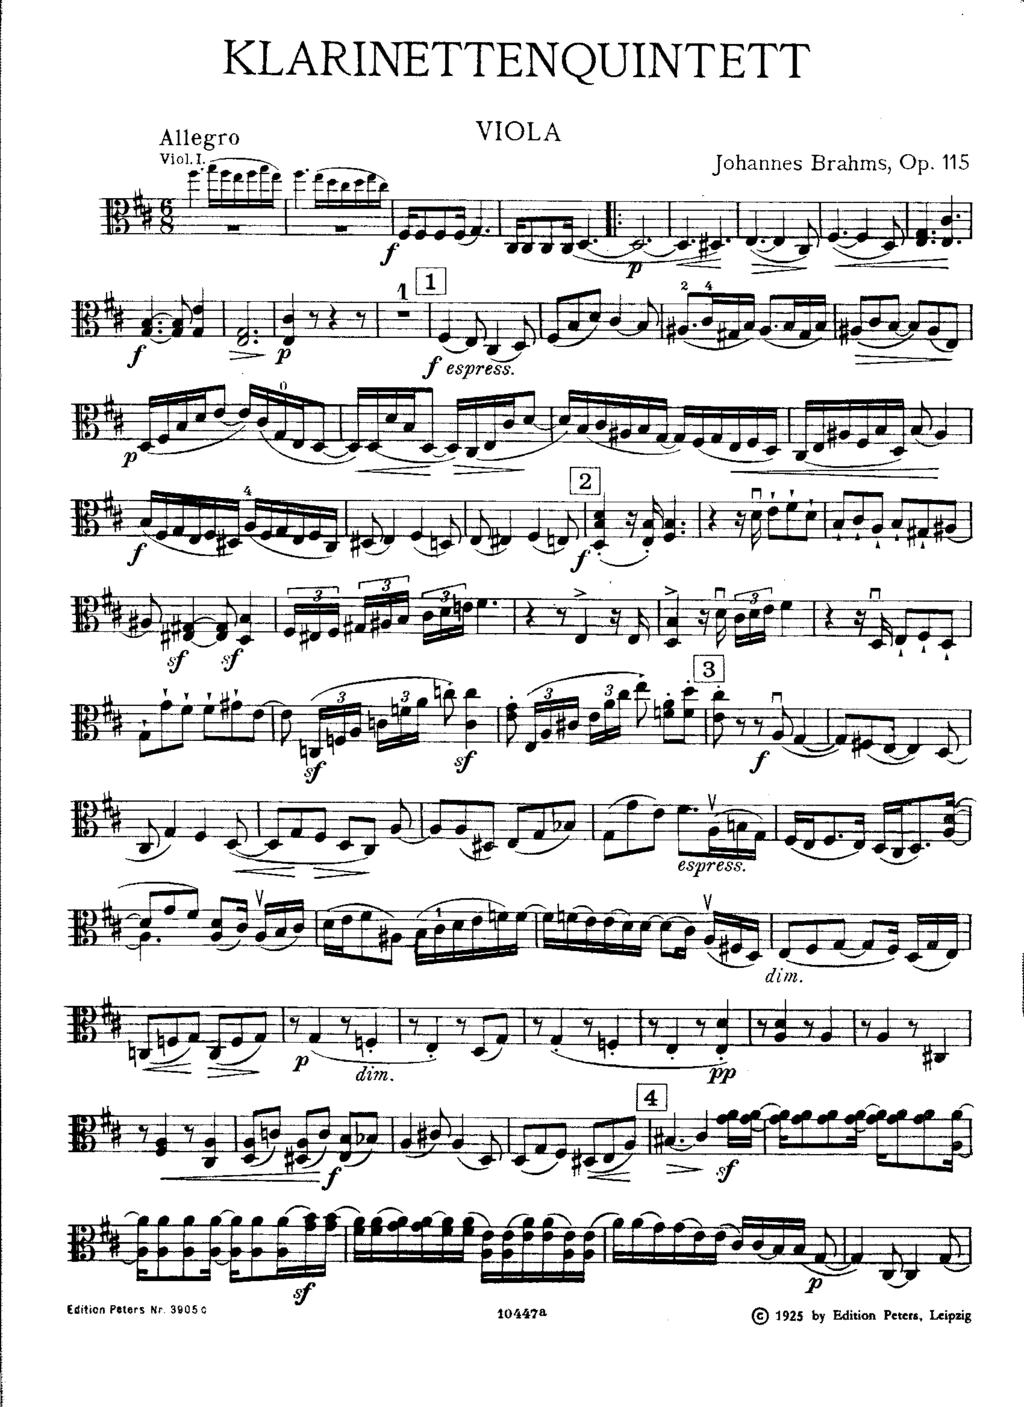 KLARINETTENQUINTETT Allegro - VIOLA Johannes Brahms, Op.